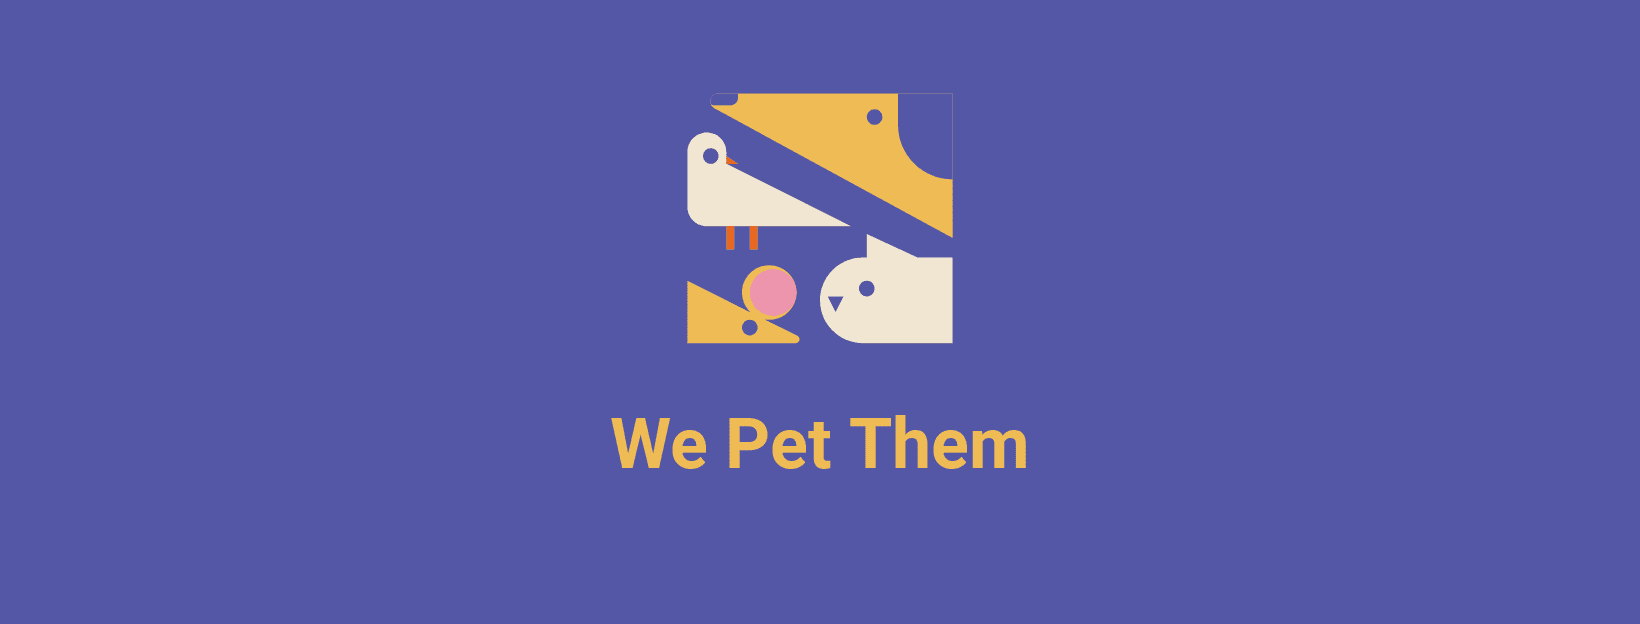 We Pet Them